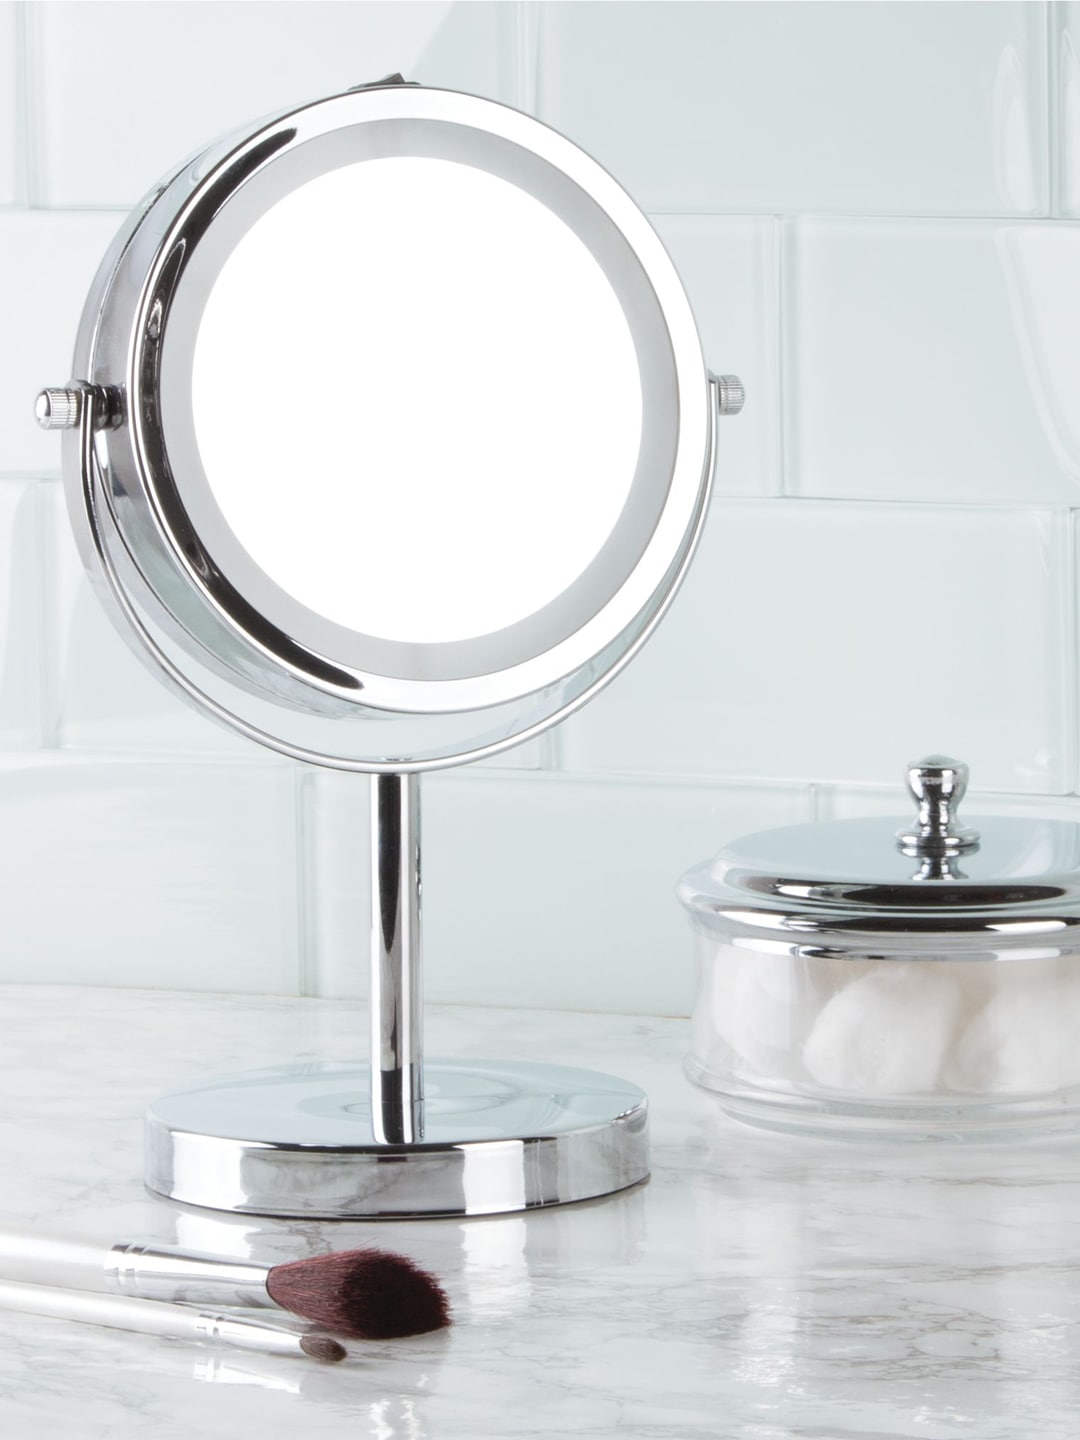 InterDesign Silver-Toned Round Bathroom Mirror Price in India